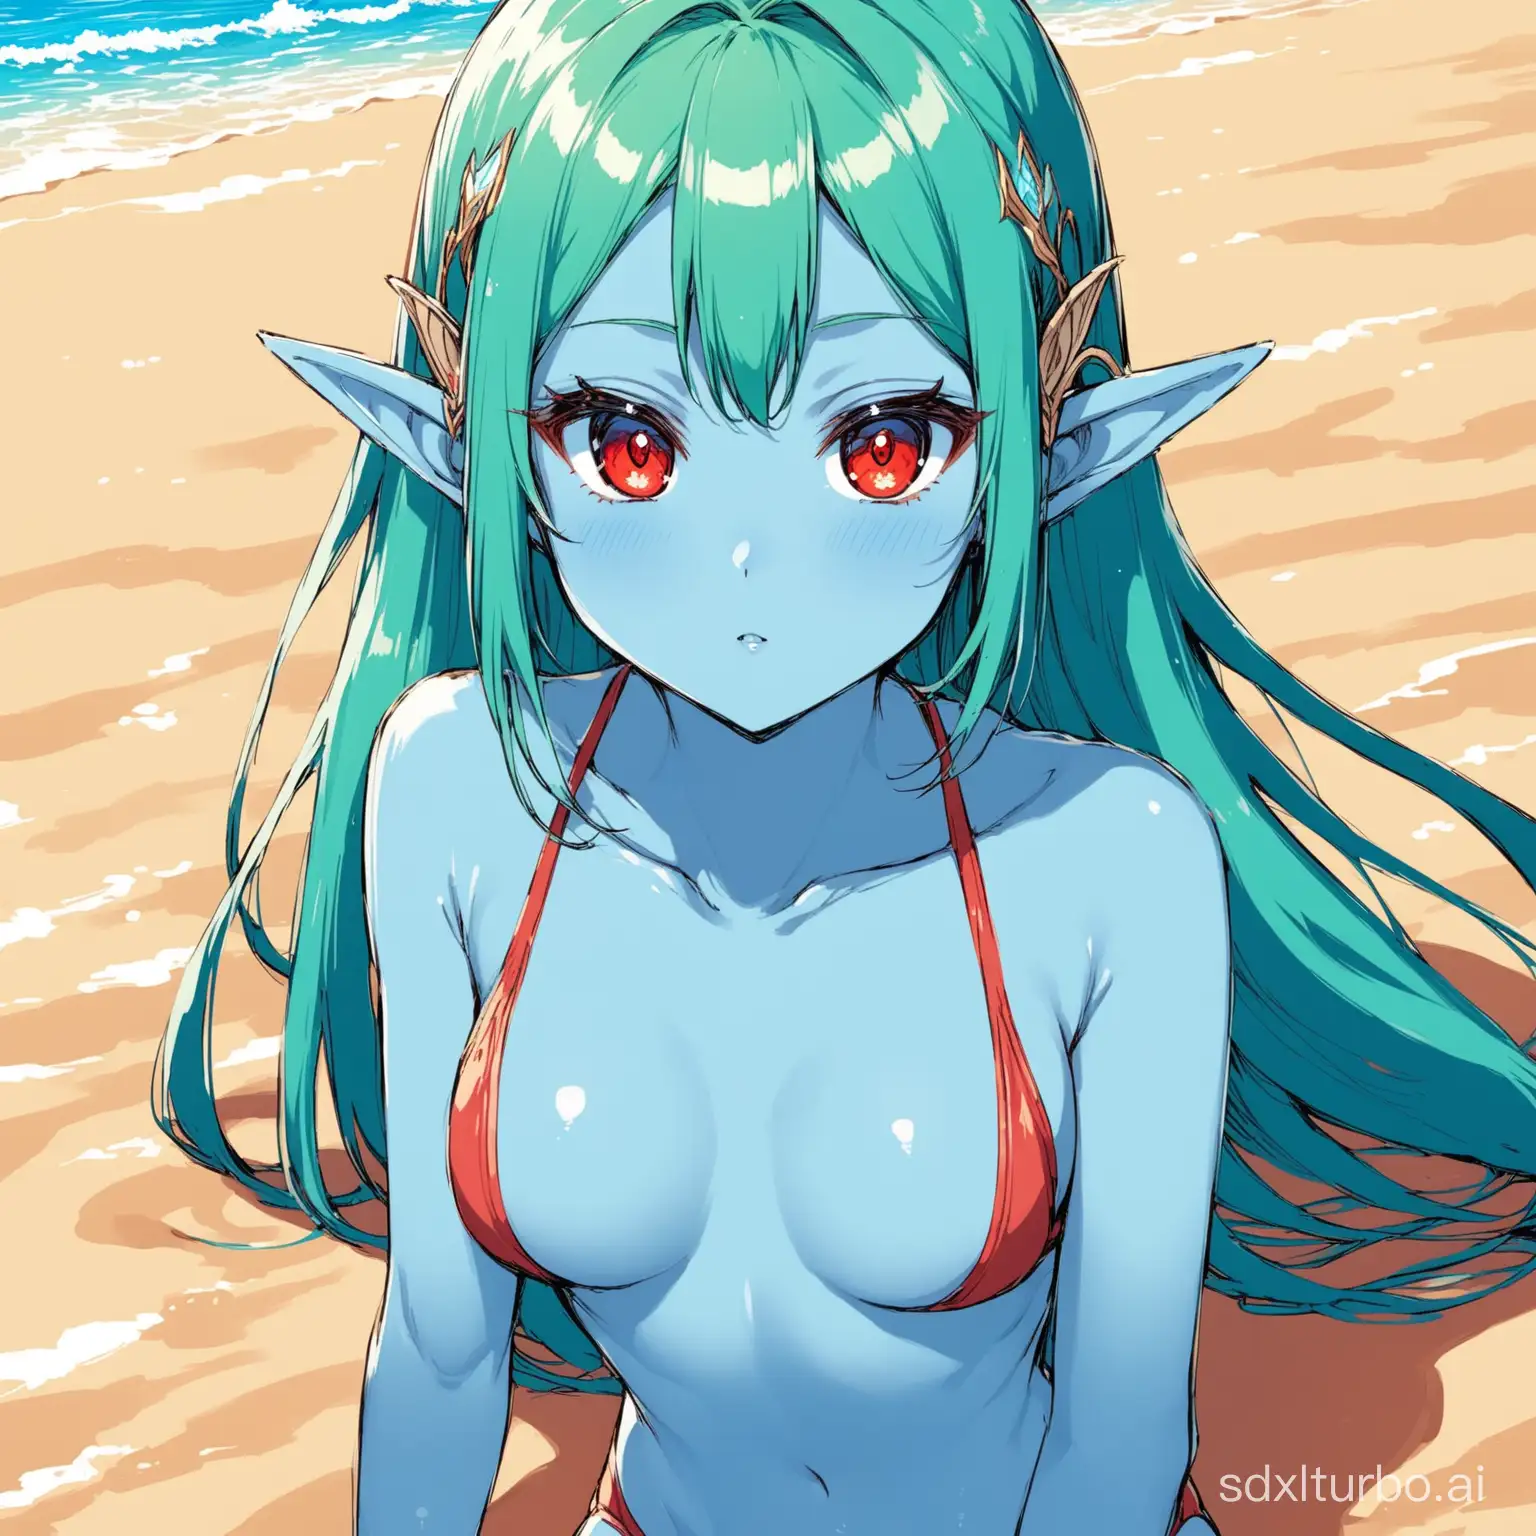 red eyed anime girl, blue skin, elven ears. Beach, swimming suit